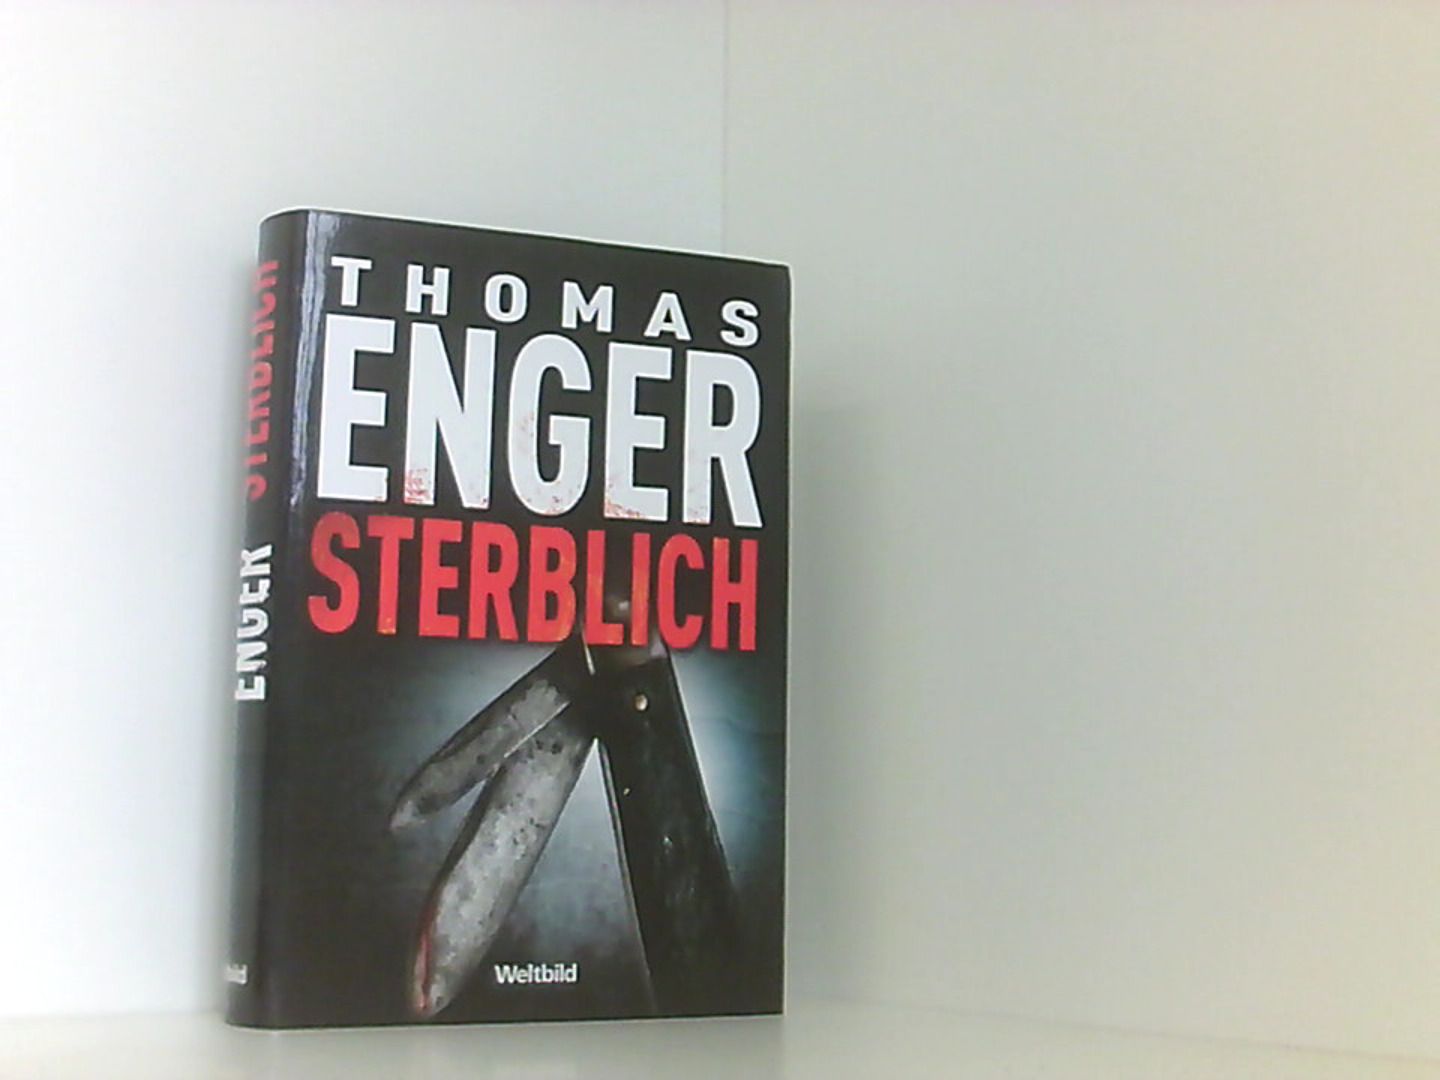 Sterblich - Thomas, Enger